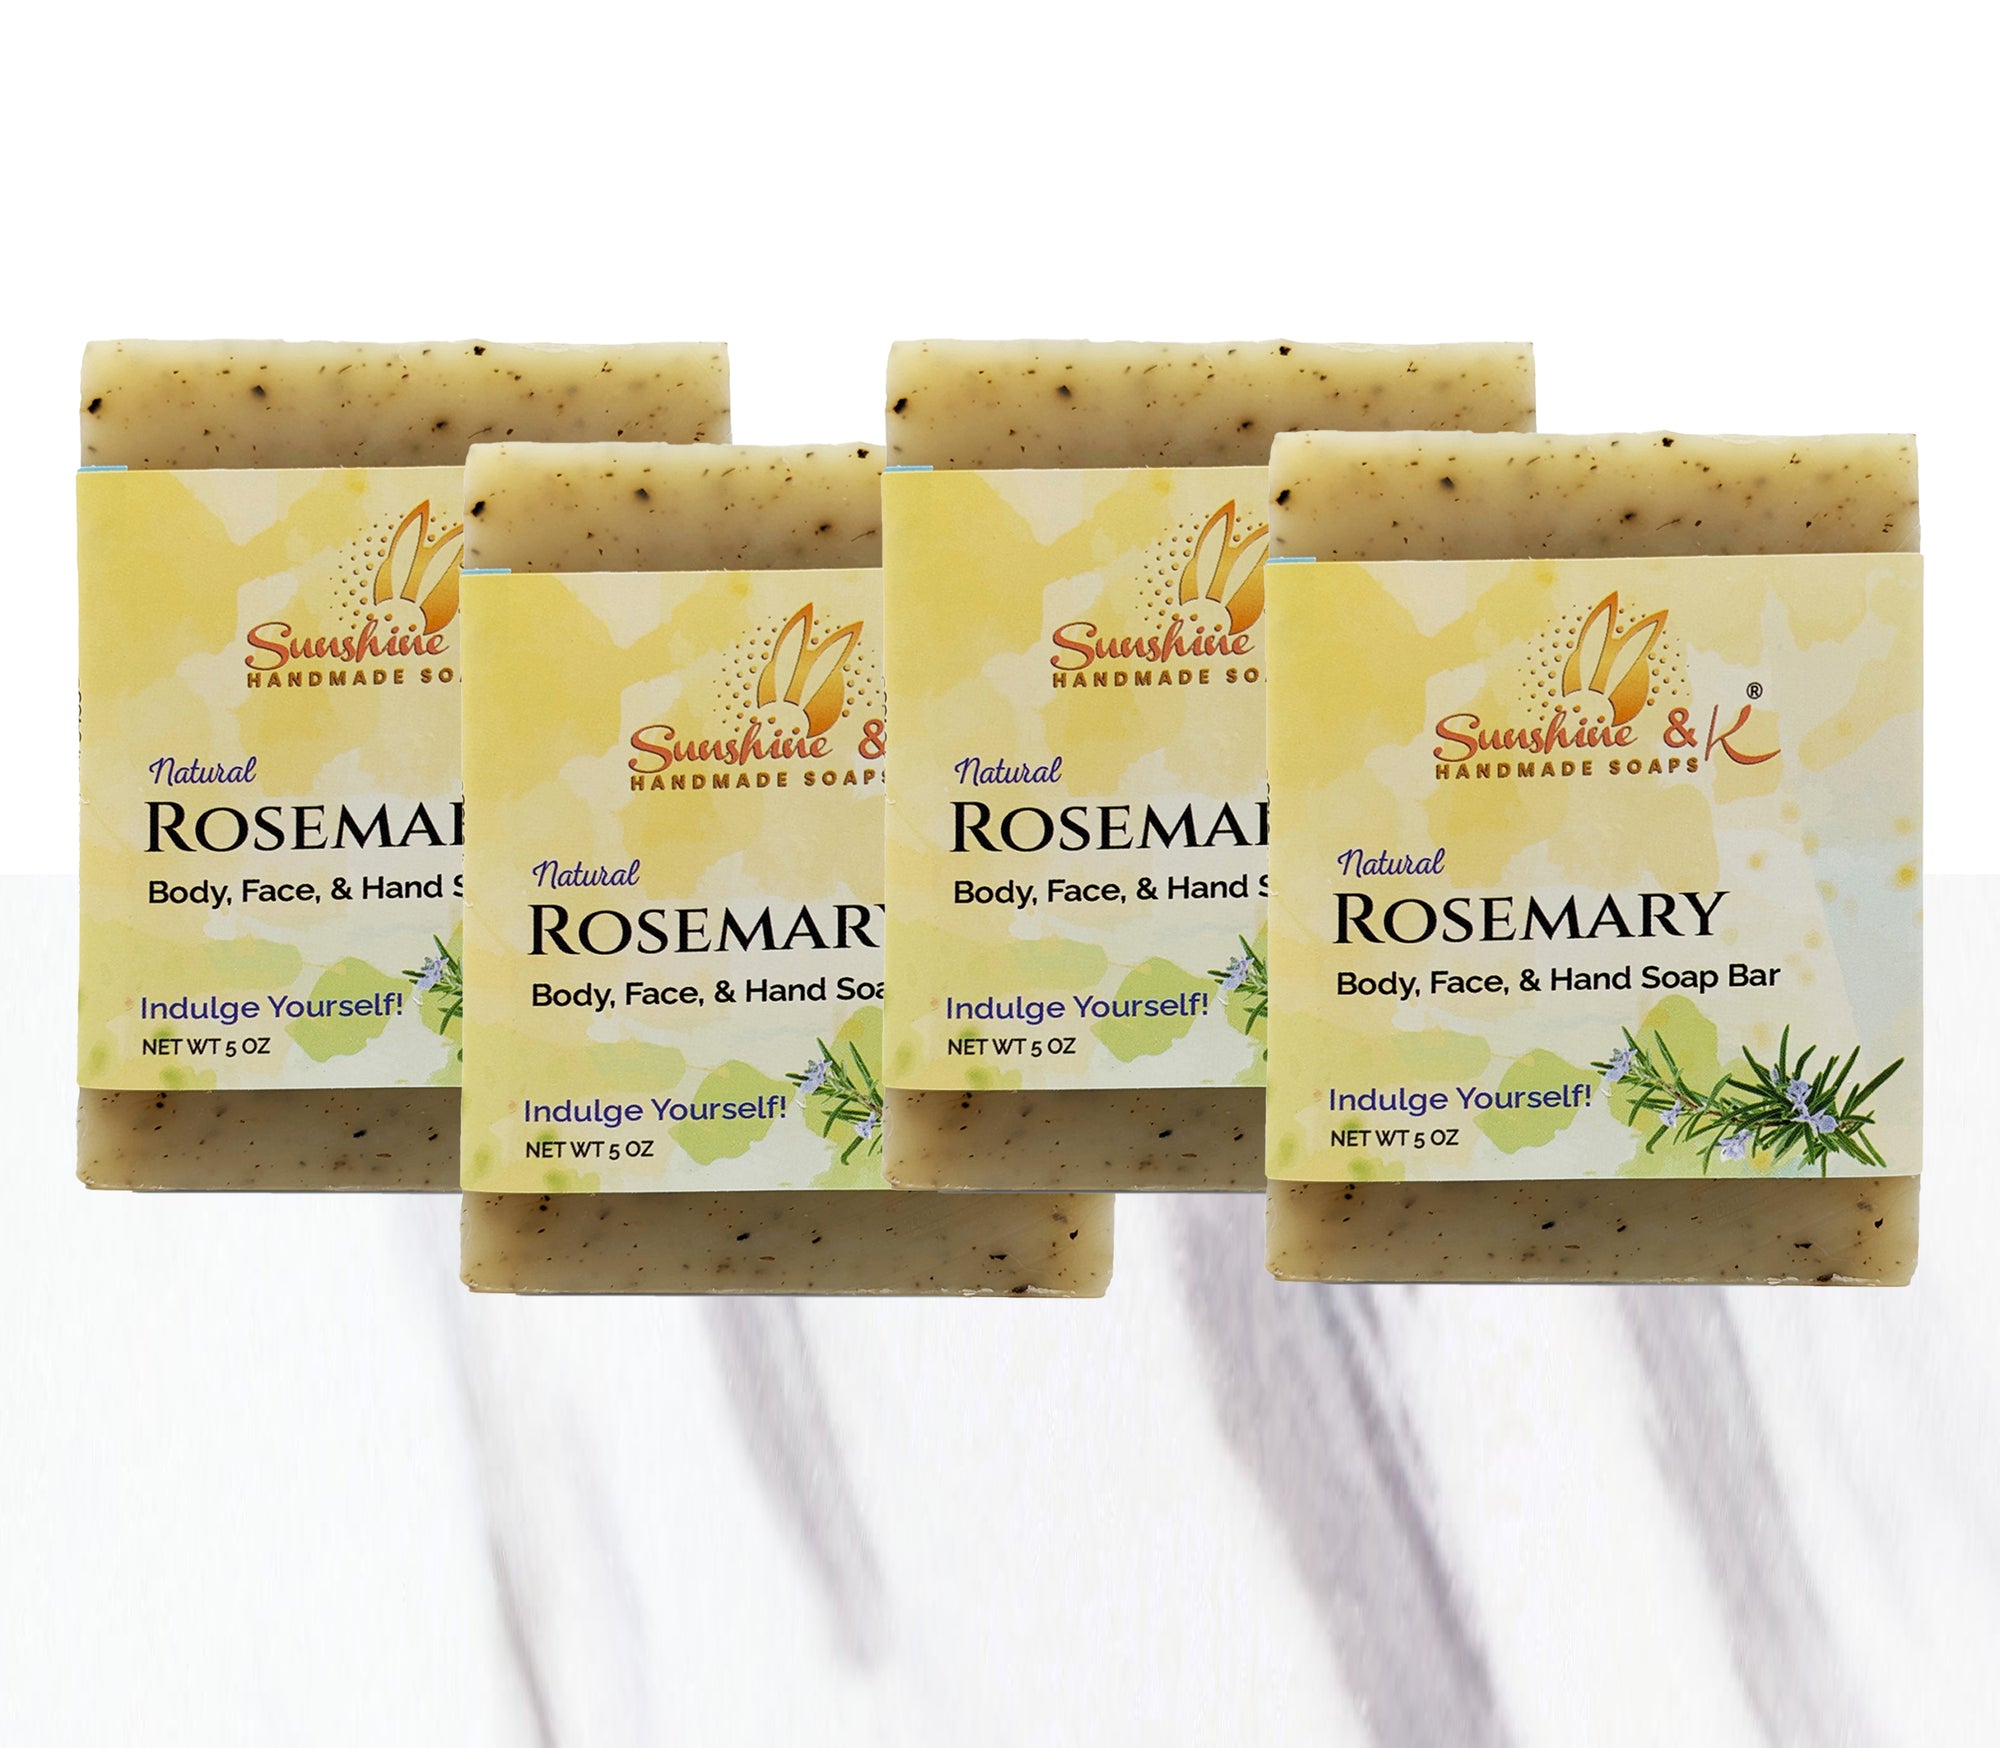 Rosemary Soap Bar - Body & Face Bar Soap, Handmade Bath Soap, Moisturizing Bar Soap With Beeswax, Rice Bran Oil, & Natural Base Oils, Natural Soap Bars, 5 oz, Sunshine & K Handmade Soaps